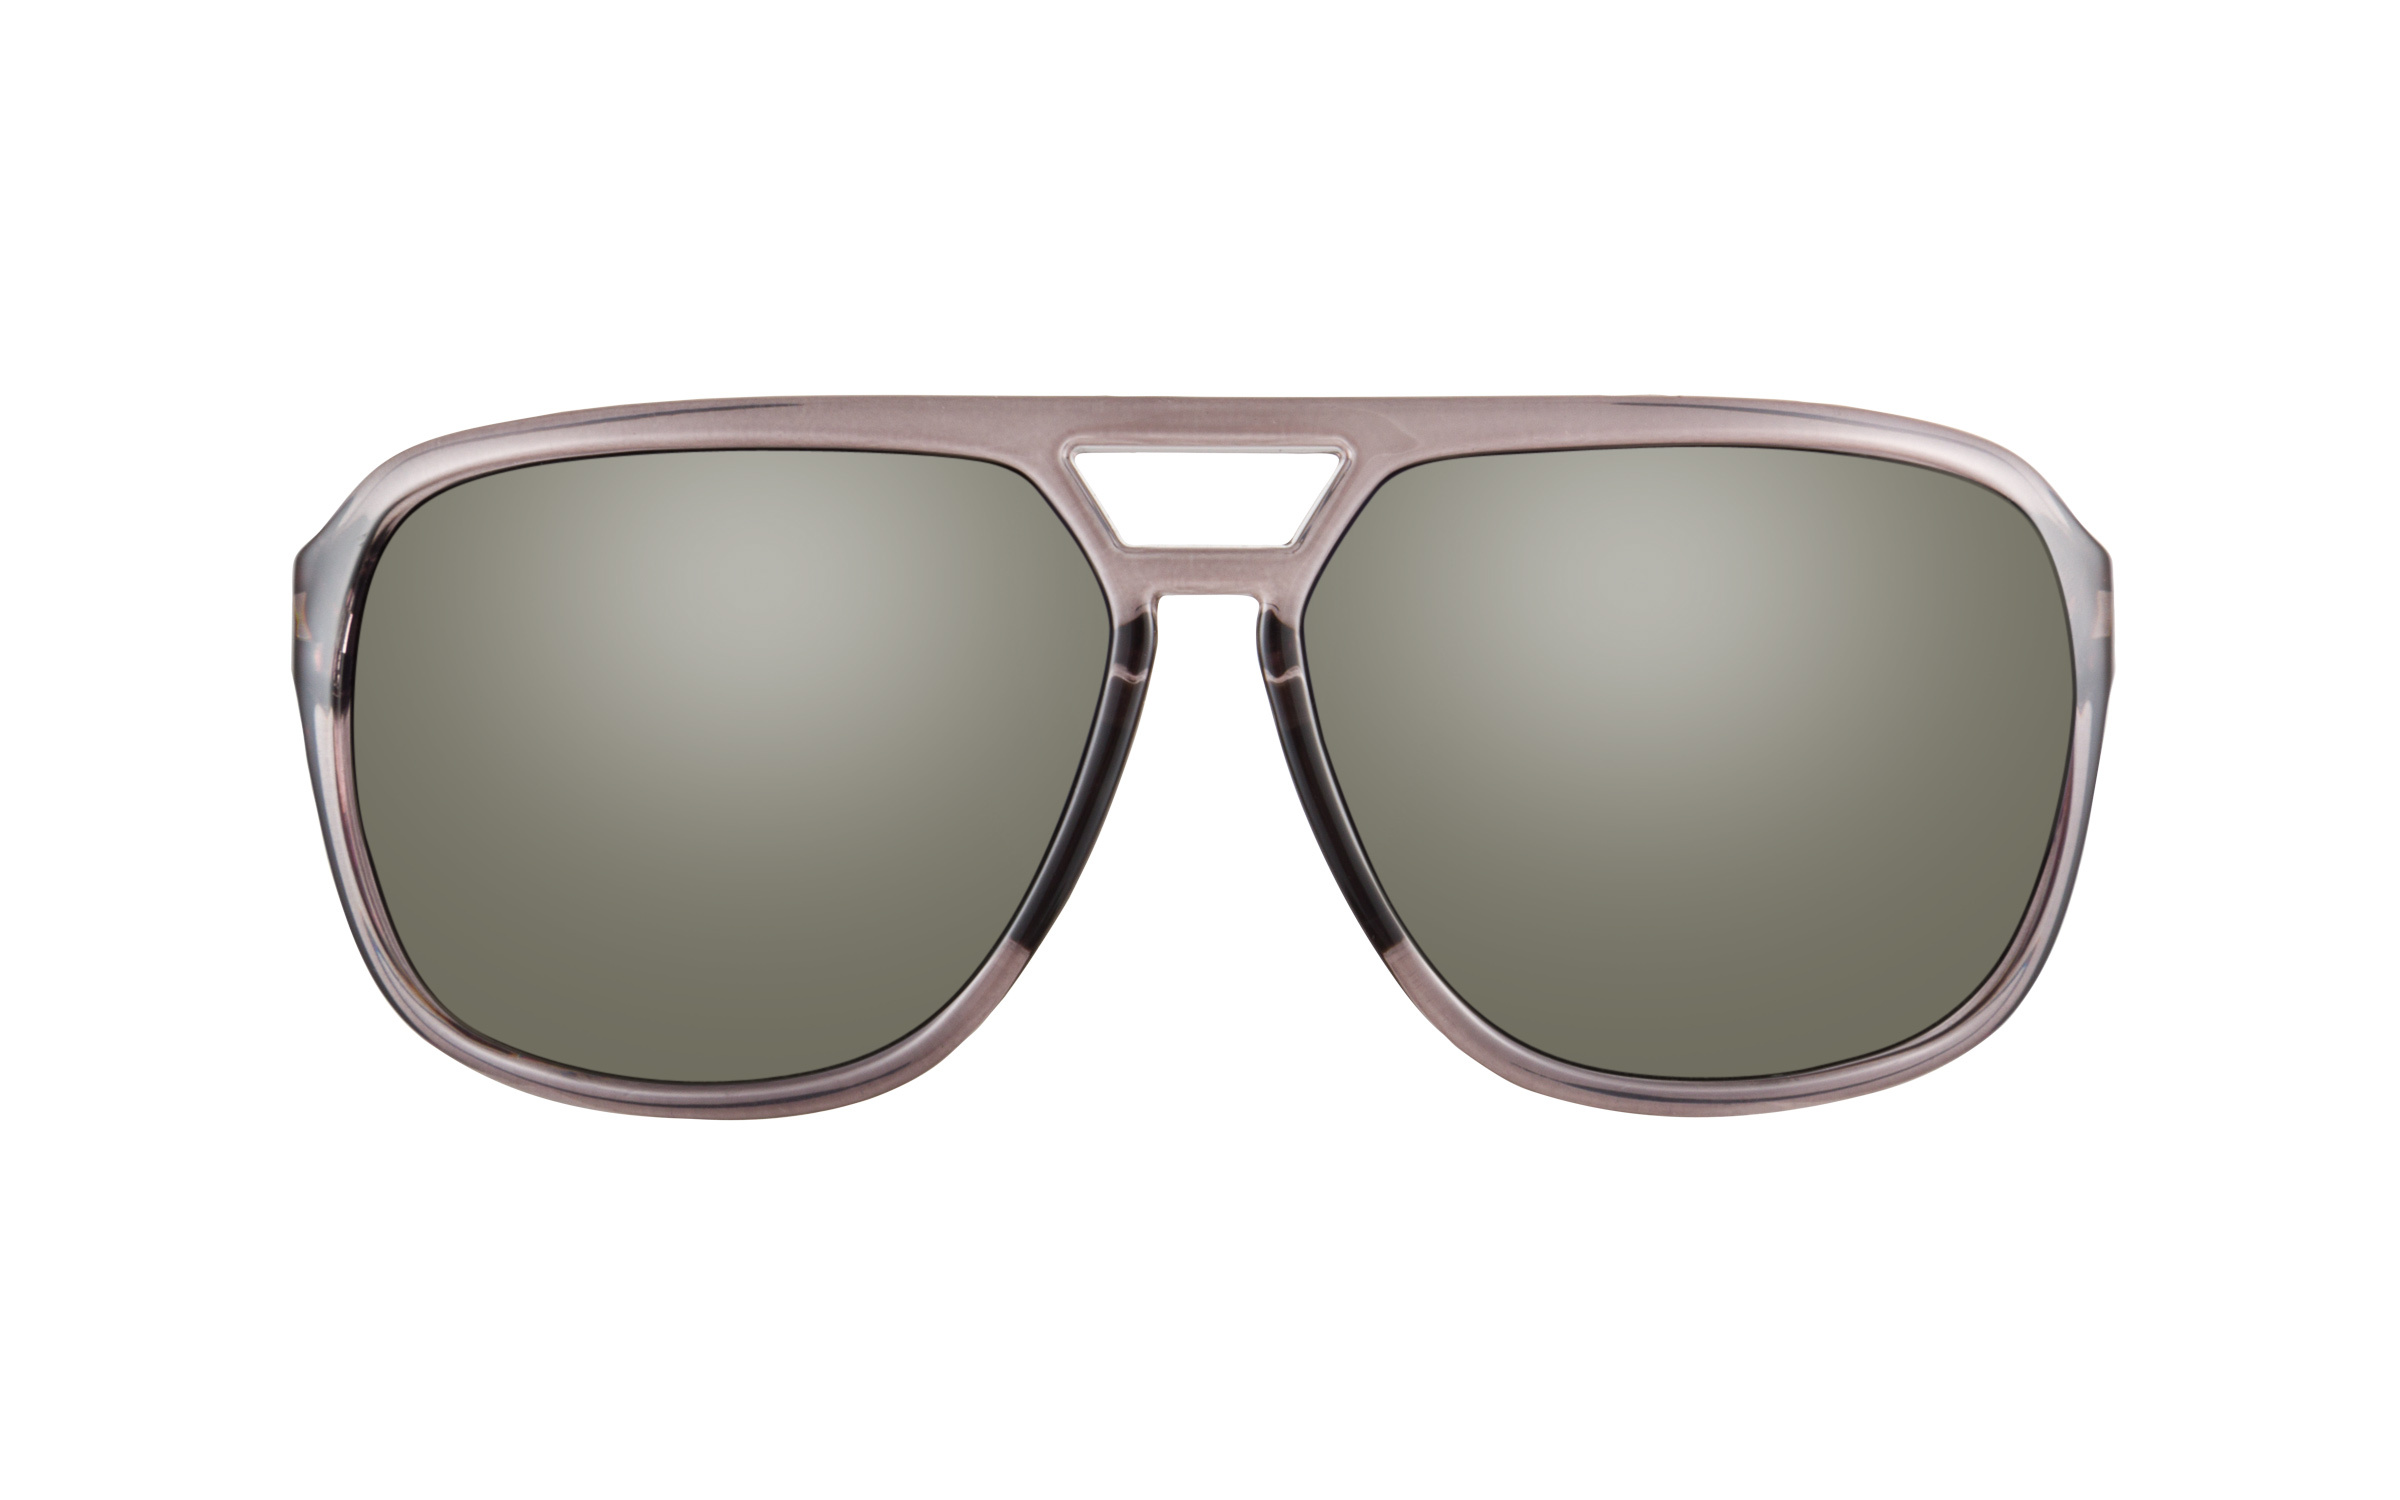 reebok classic sunglasses silver